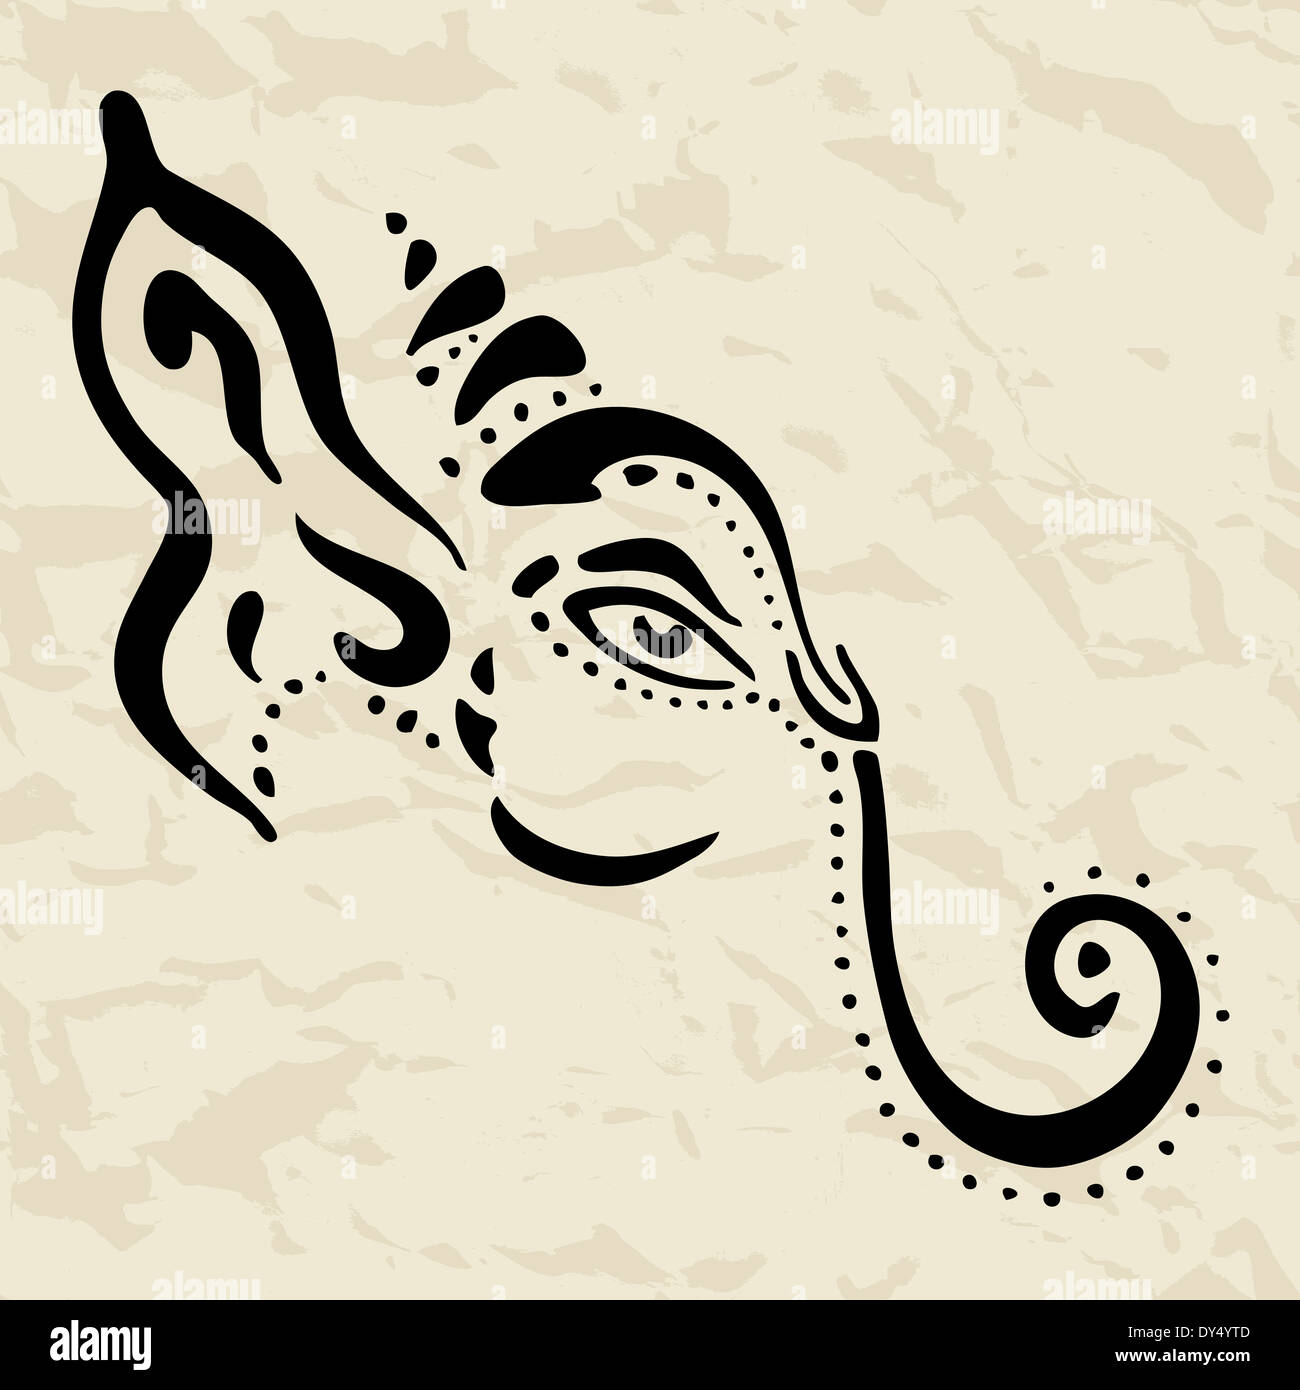 Ganesha Hand drawn illustration Stock Photo - Alamy